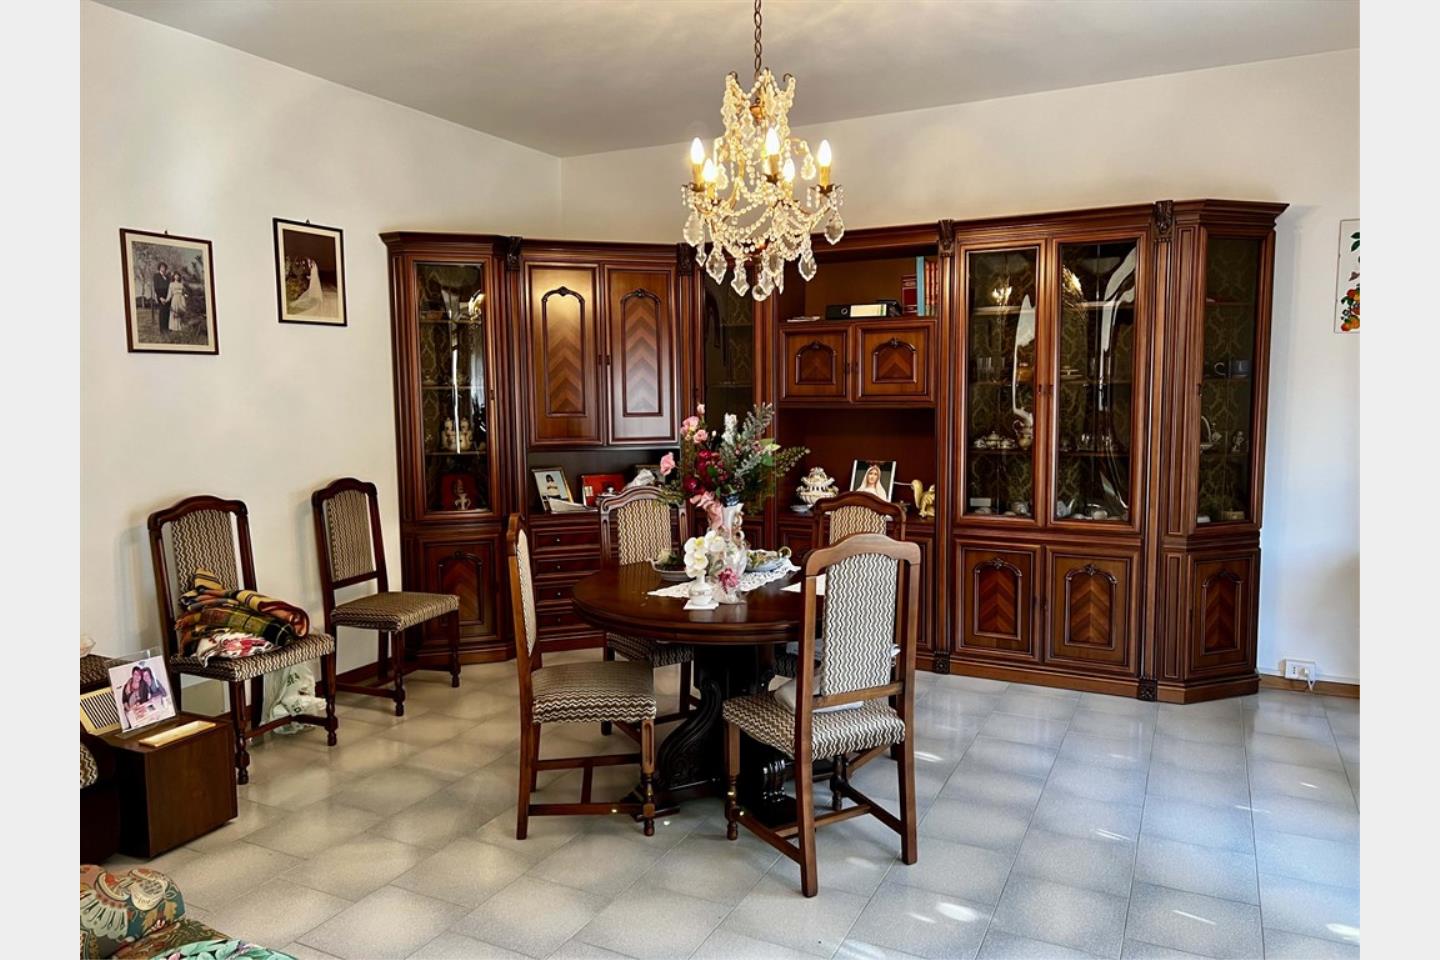 Villa bifamiliare in Vendita Alfonsine